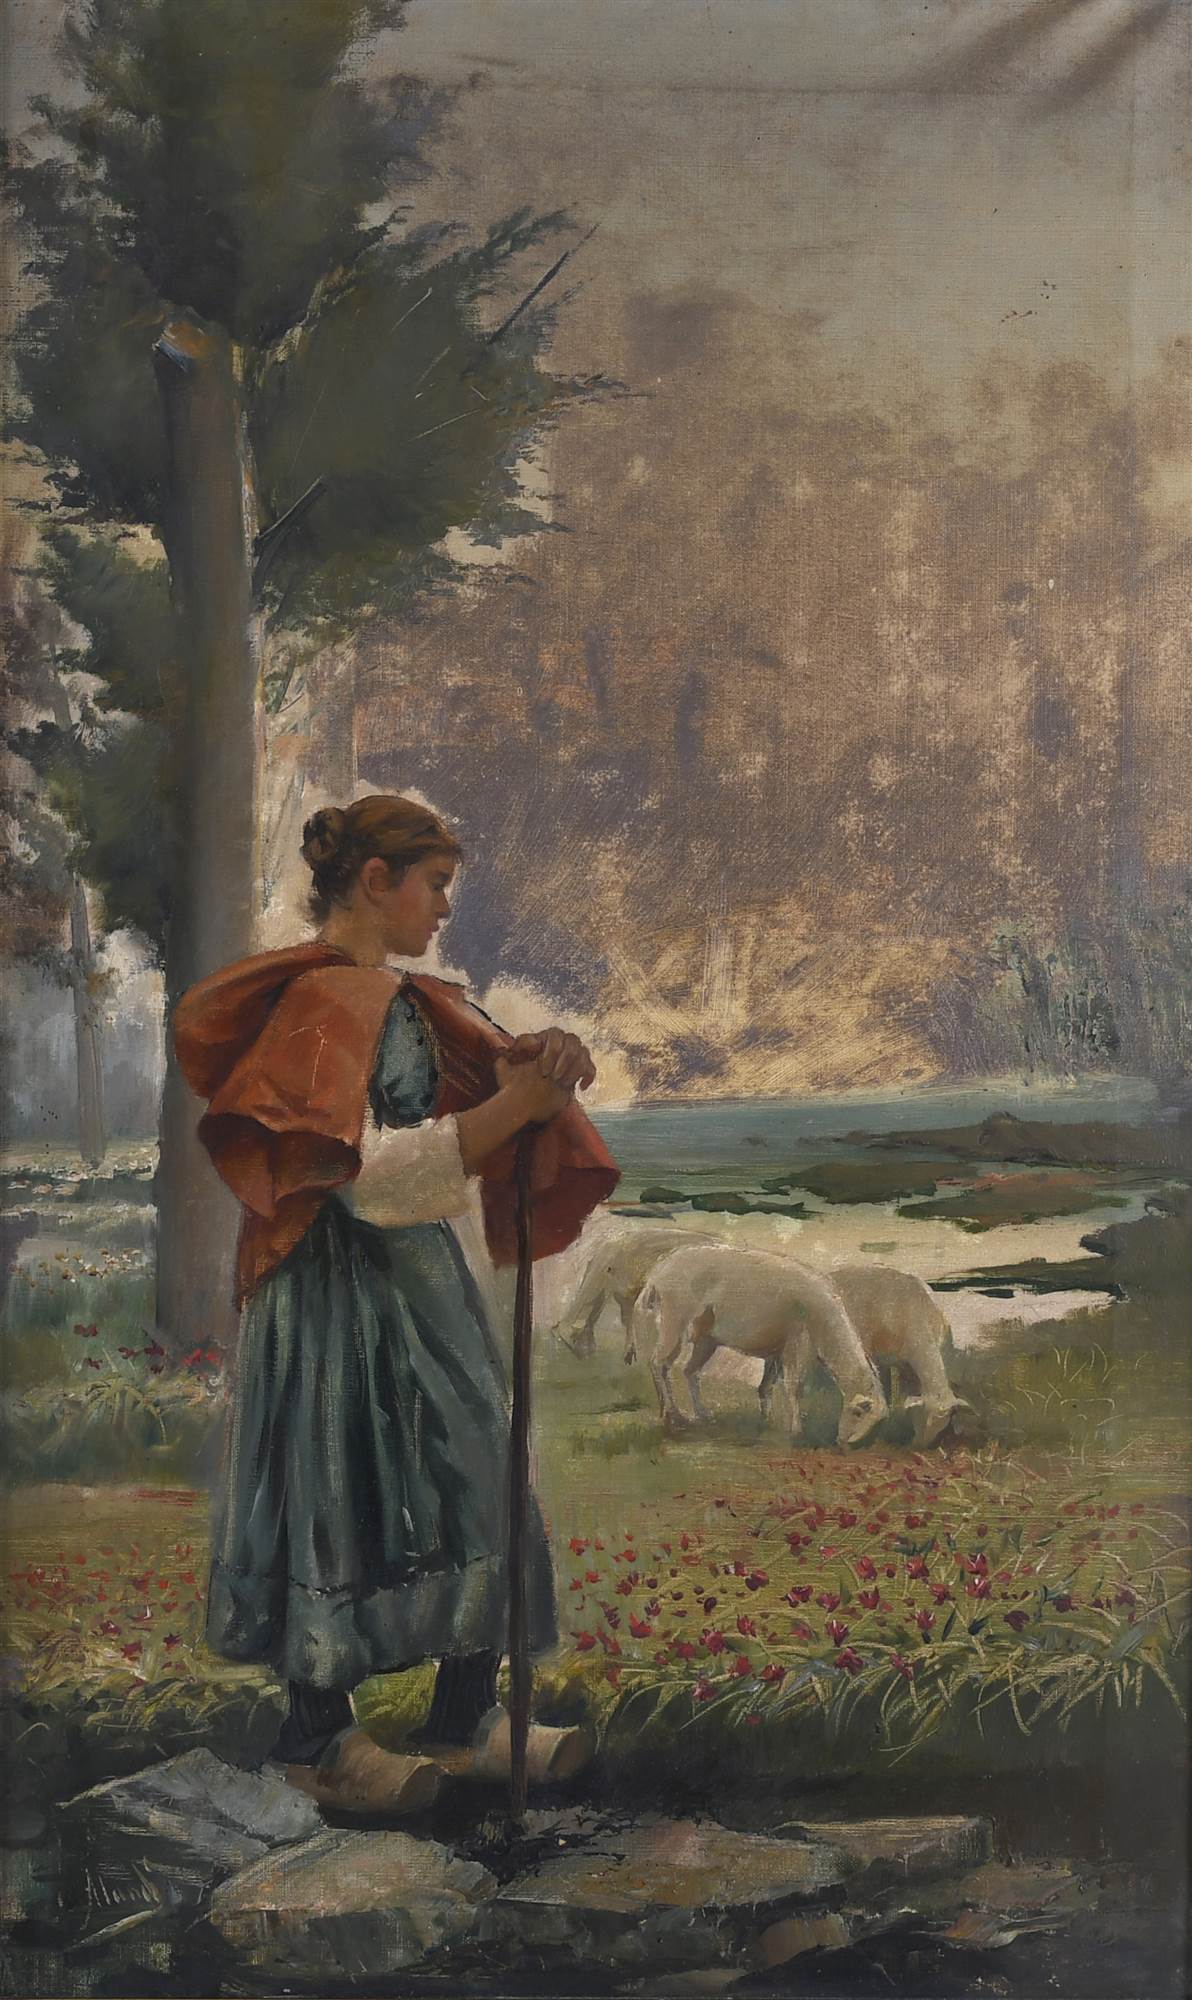 CRISTÒFOR ALANDI (1856-1896). "SHEPHERDESS".